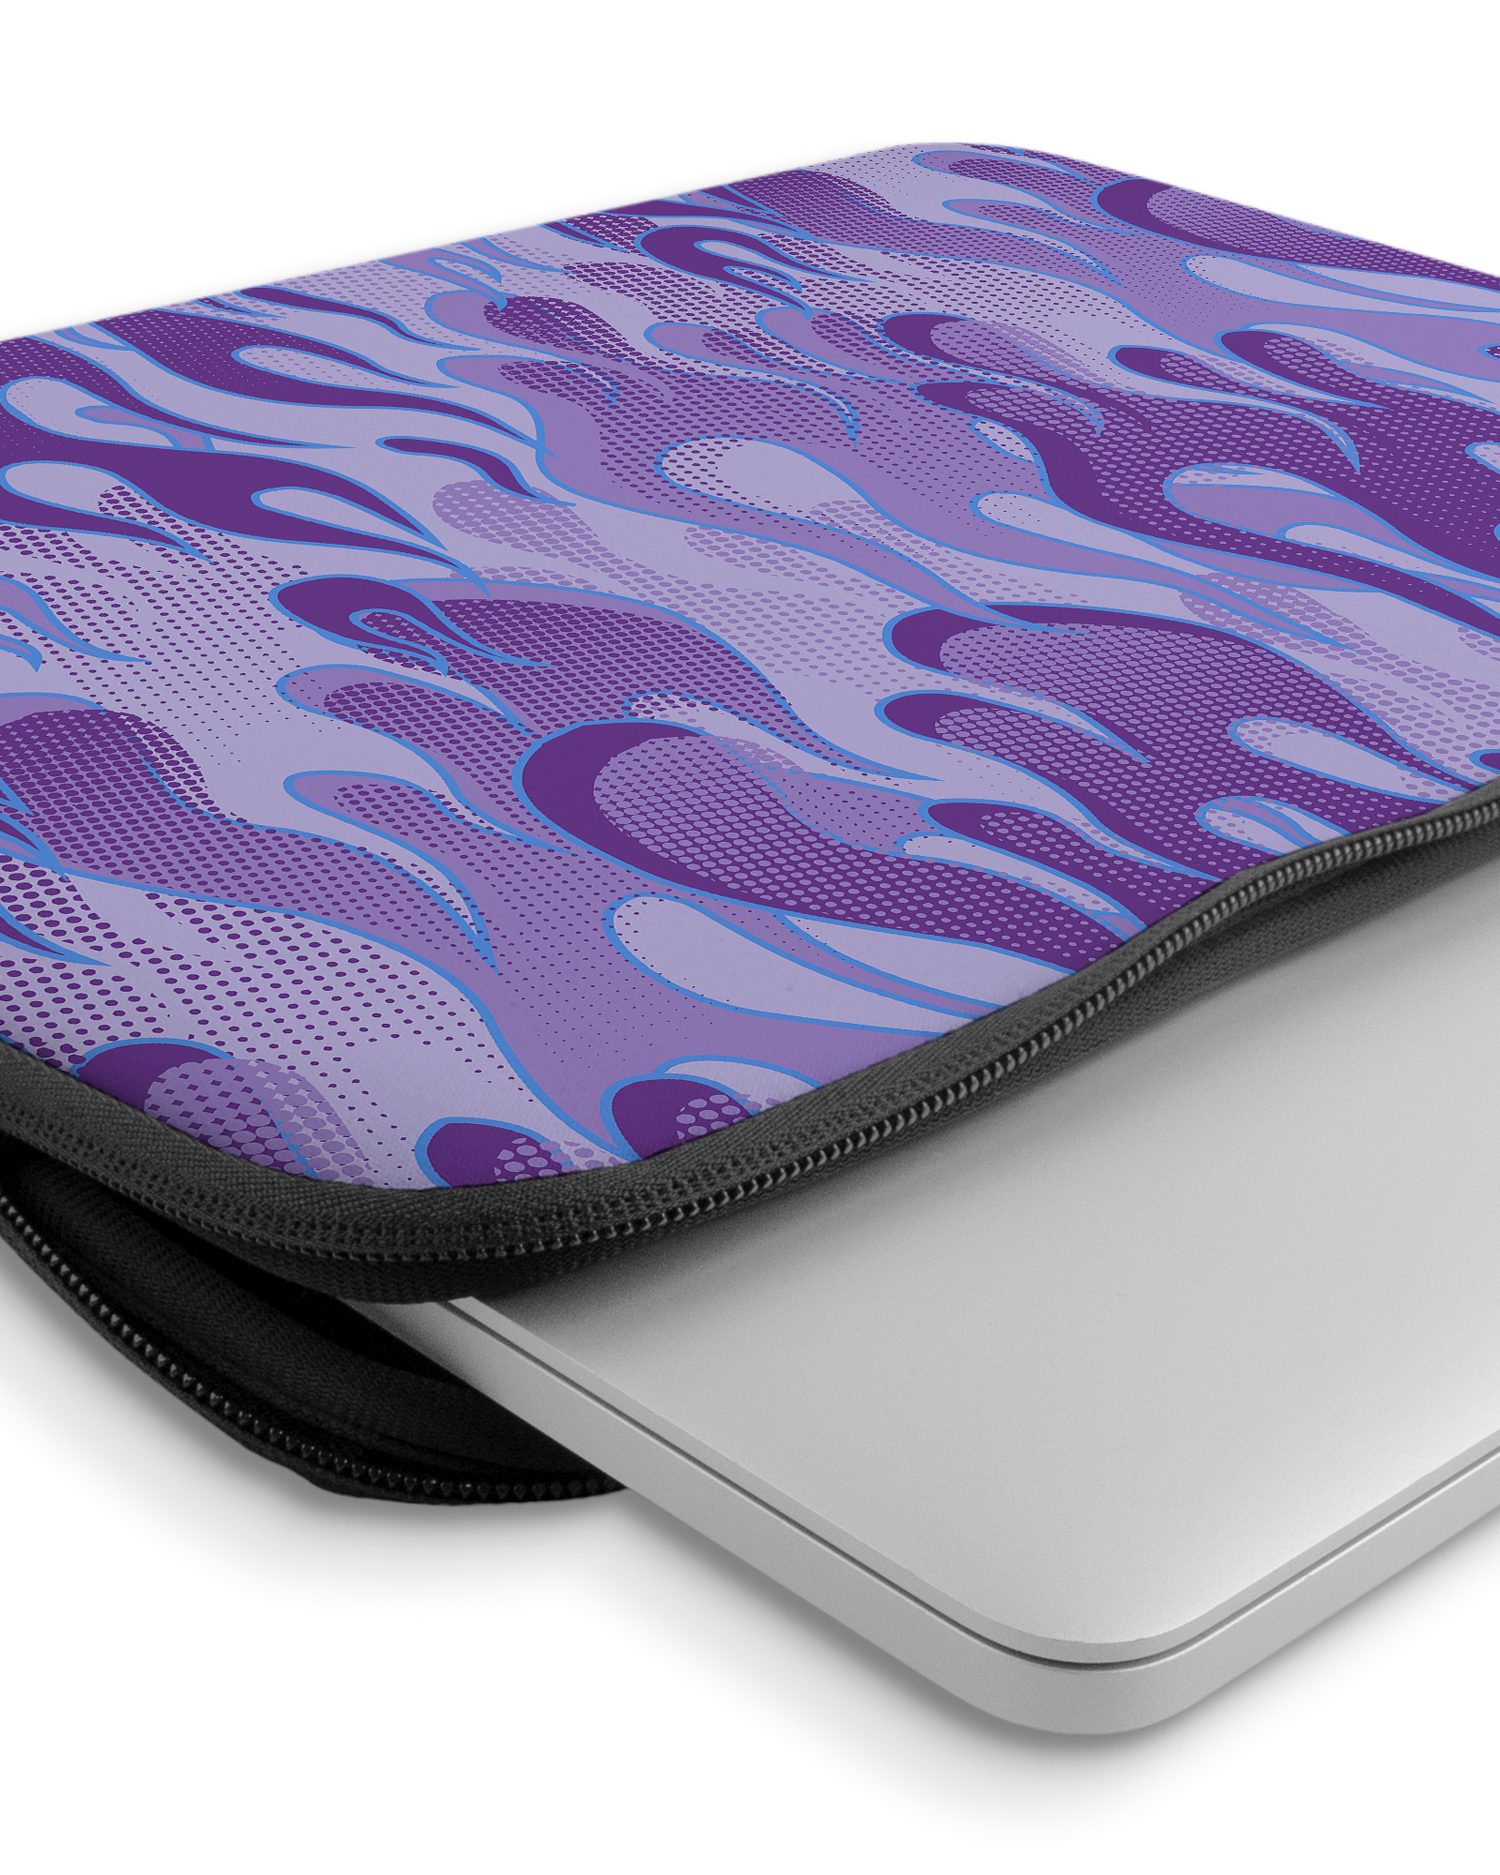 Purple Flames Laptophülle 14-15 Zoll mit Gerät im Inneren